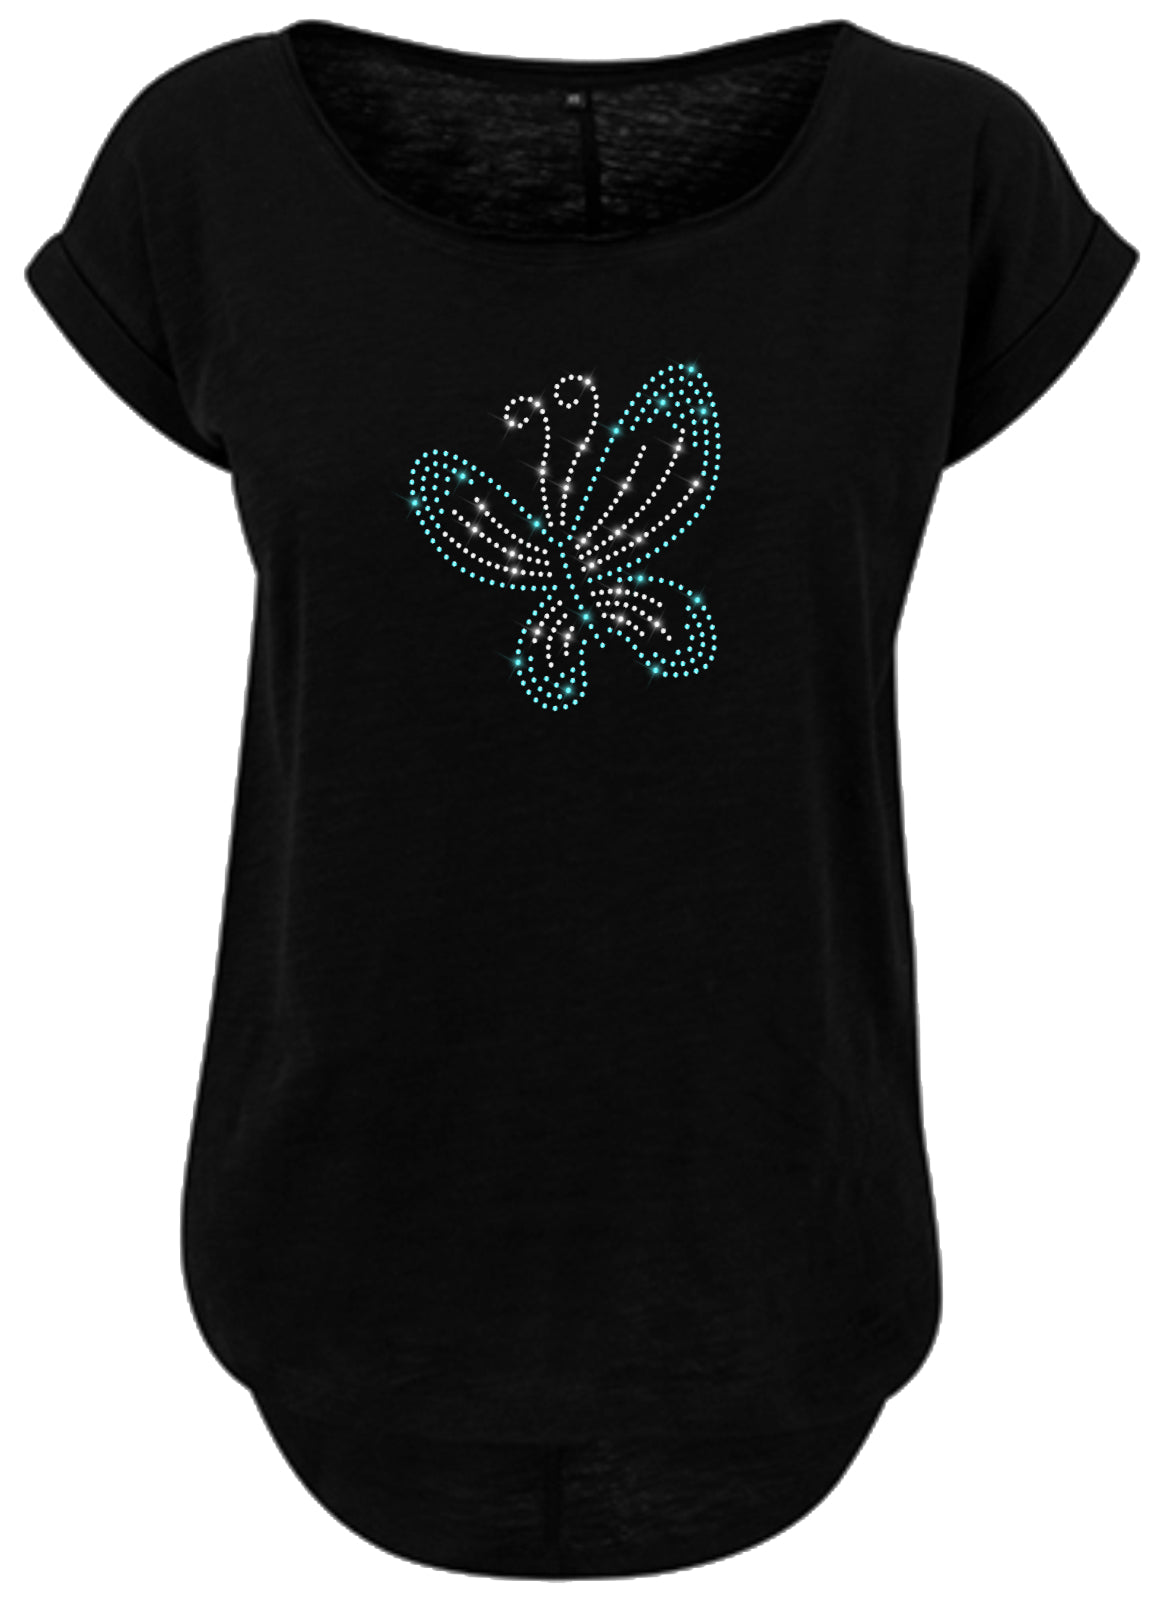 Blingeling®Shirts Damen T-Shirt   mit Schmetterling in Strass Hellblau und Kristall Butterfly